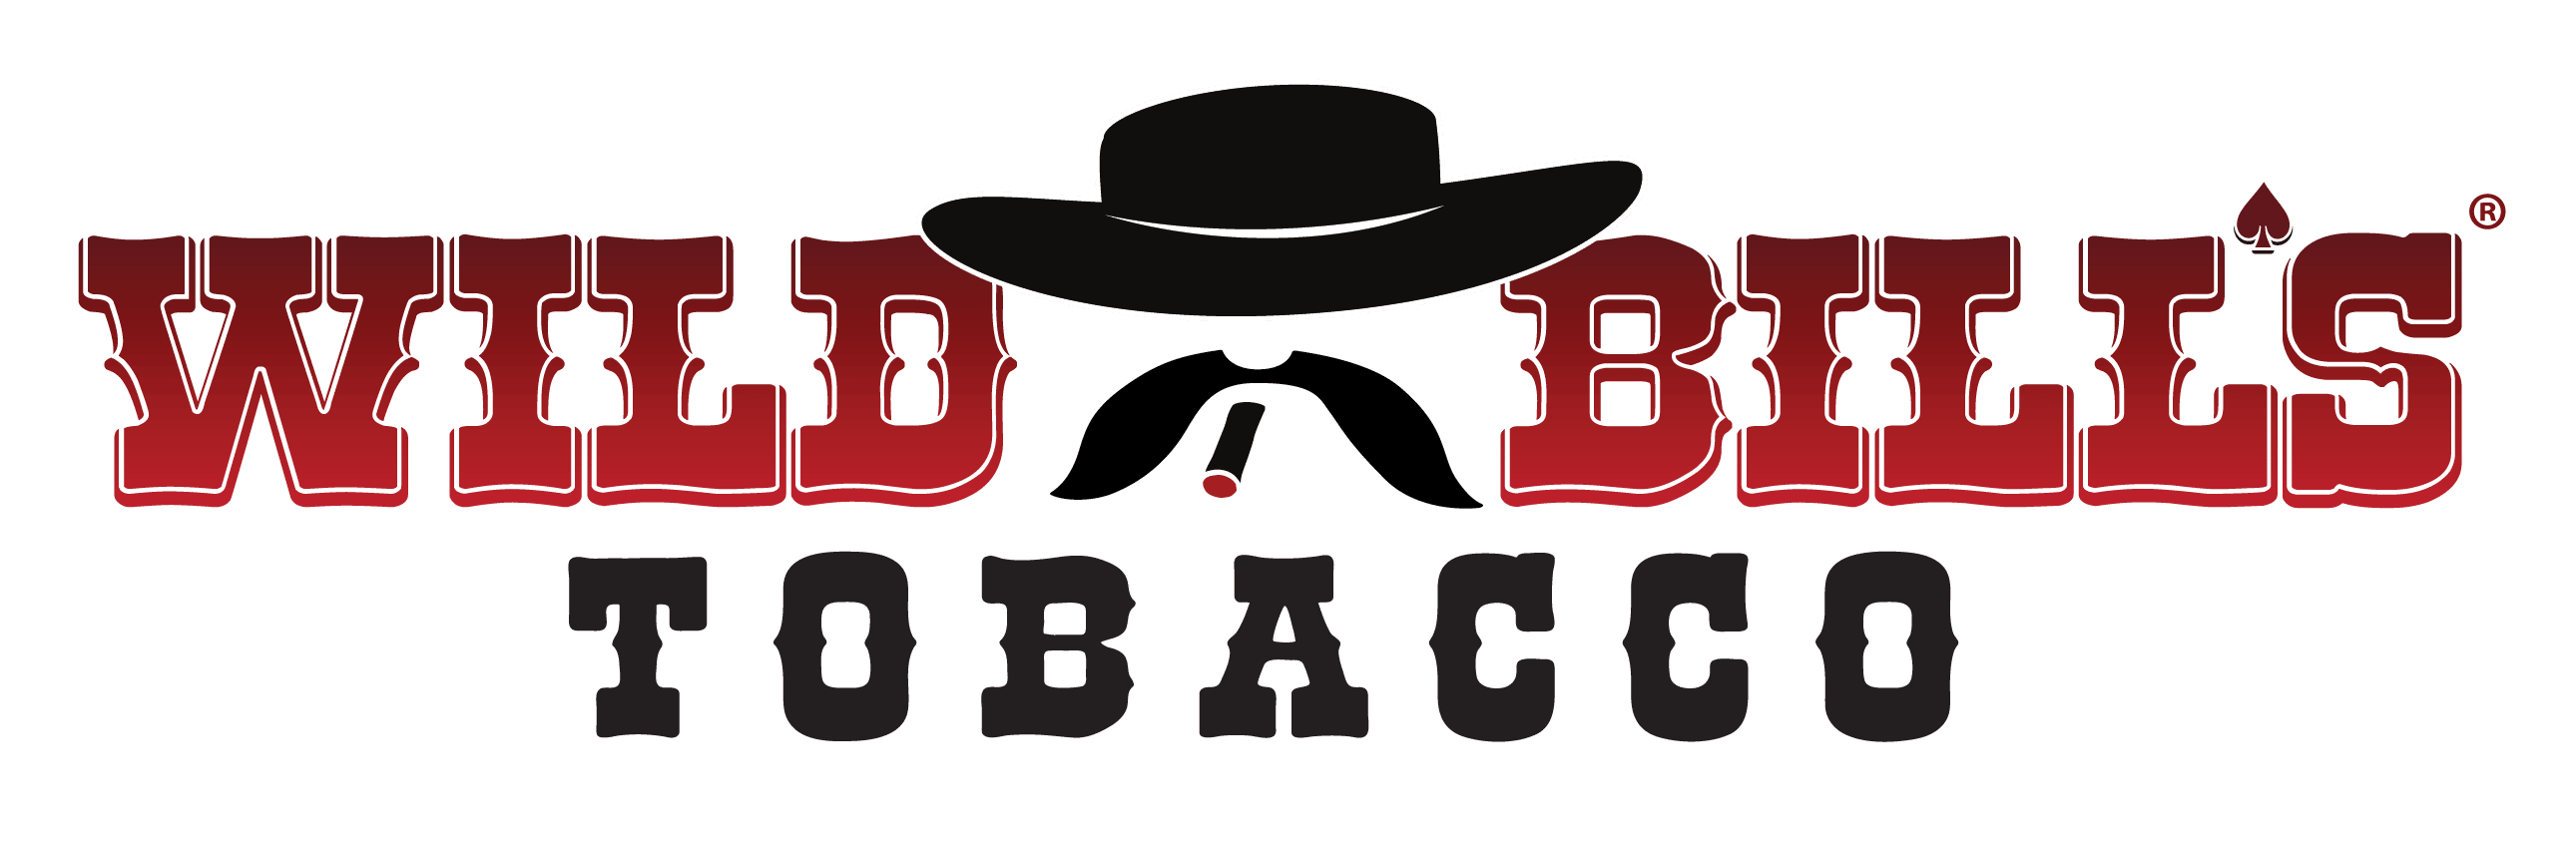 Wild Bill's Tobacco